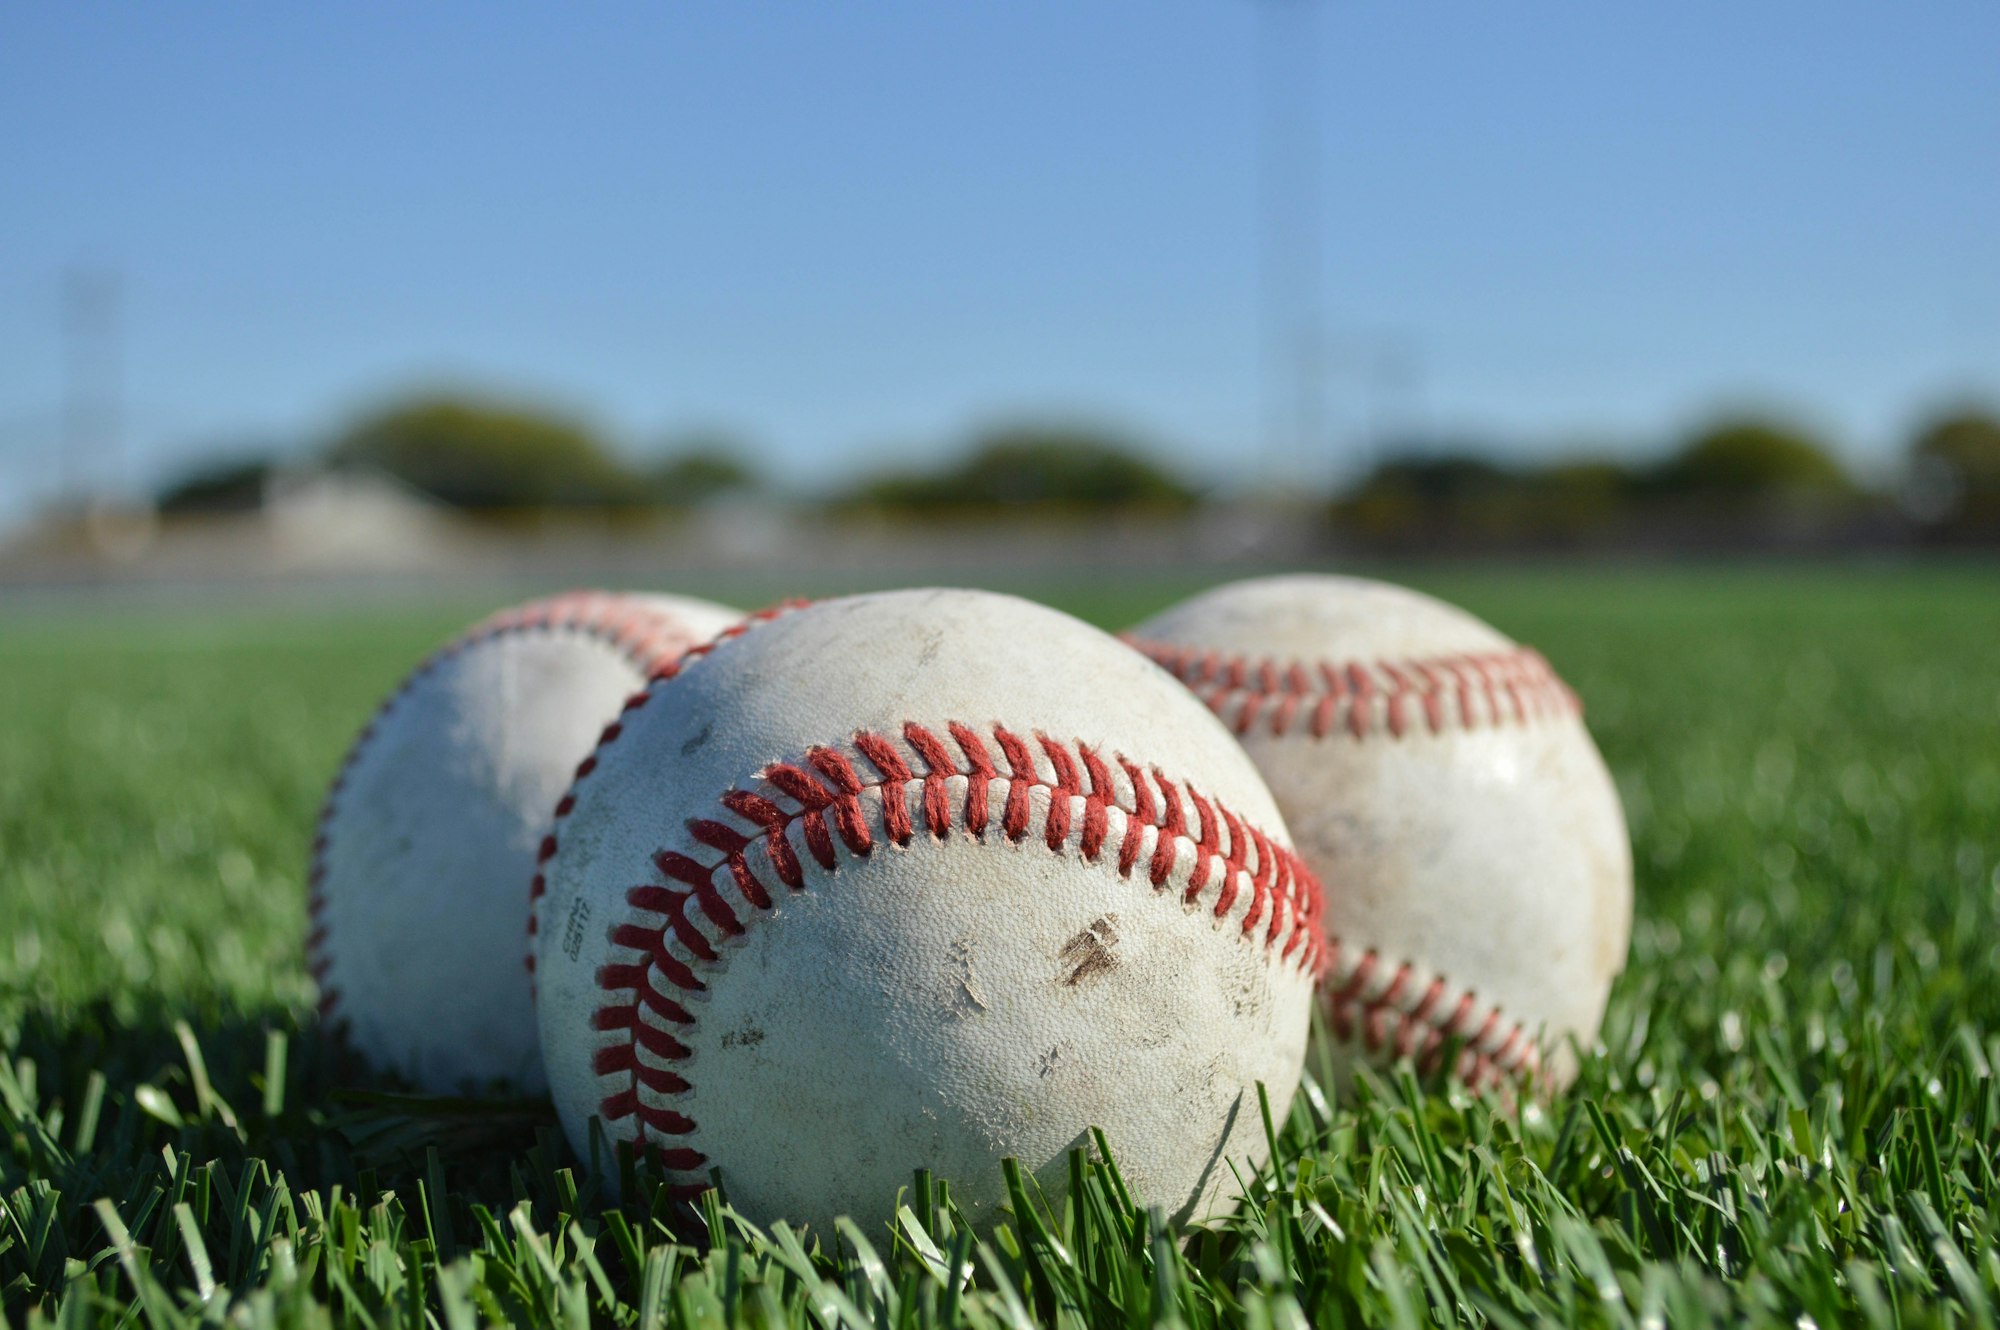 Three baseballs on green grass